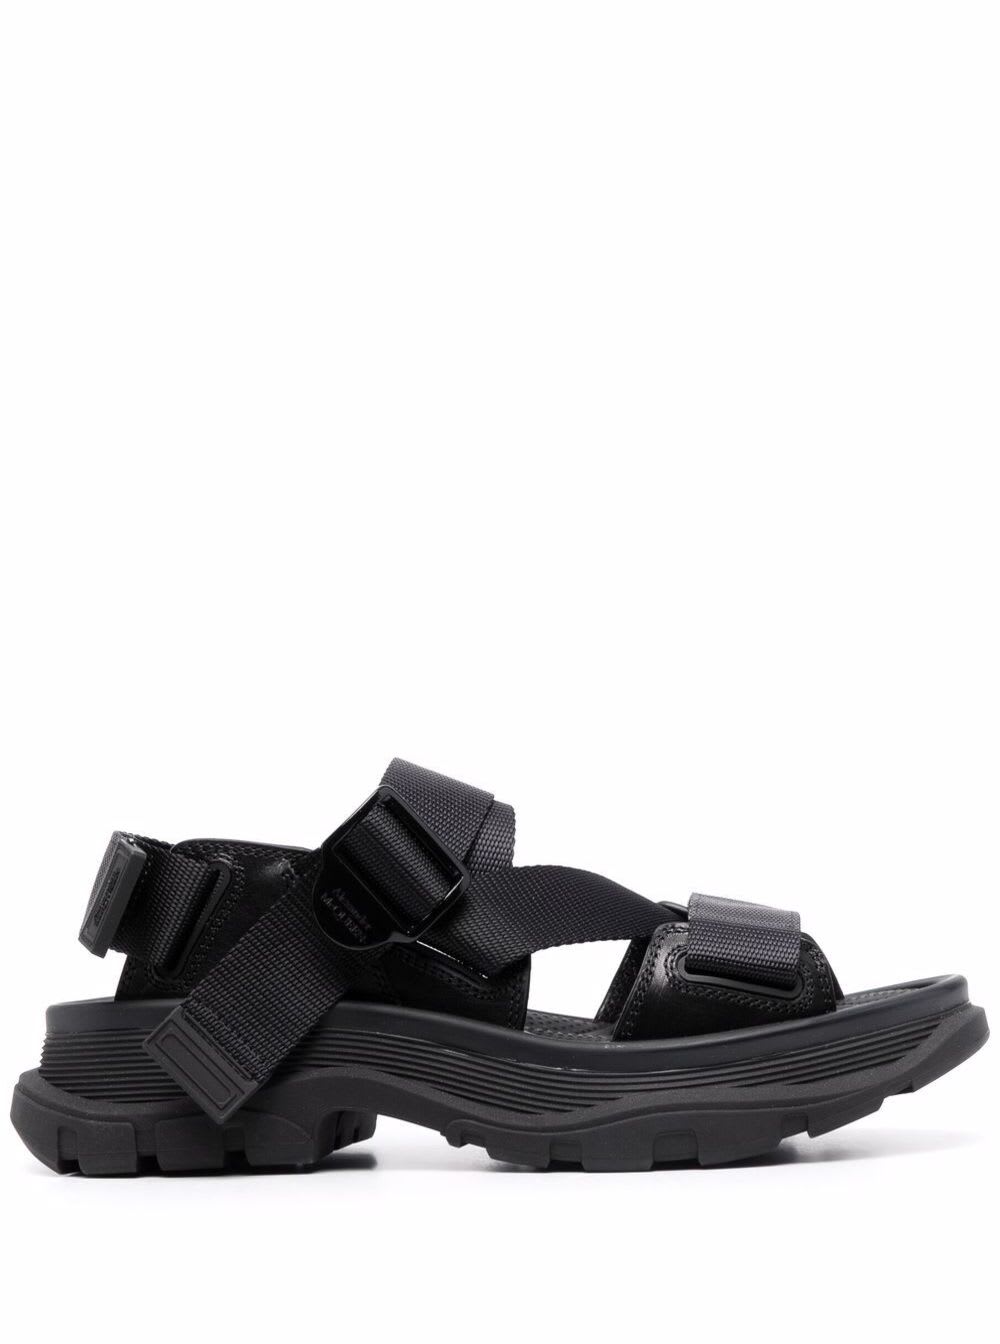 Alexander McQueen Black Tread Sandals With Ergonomic Rubber Sole